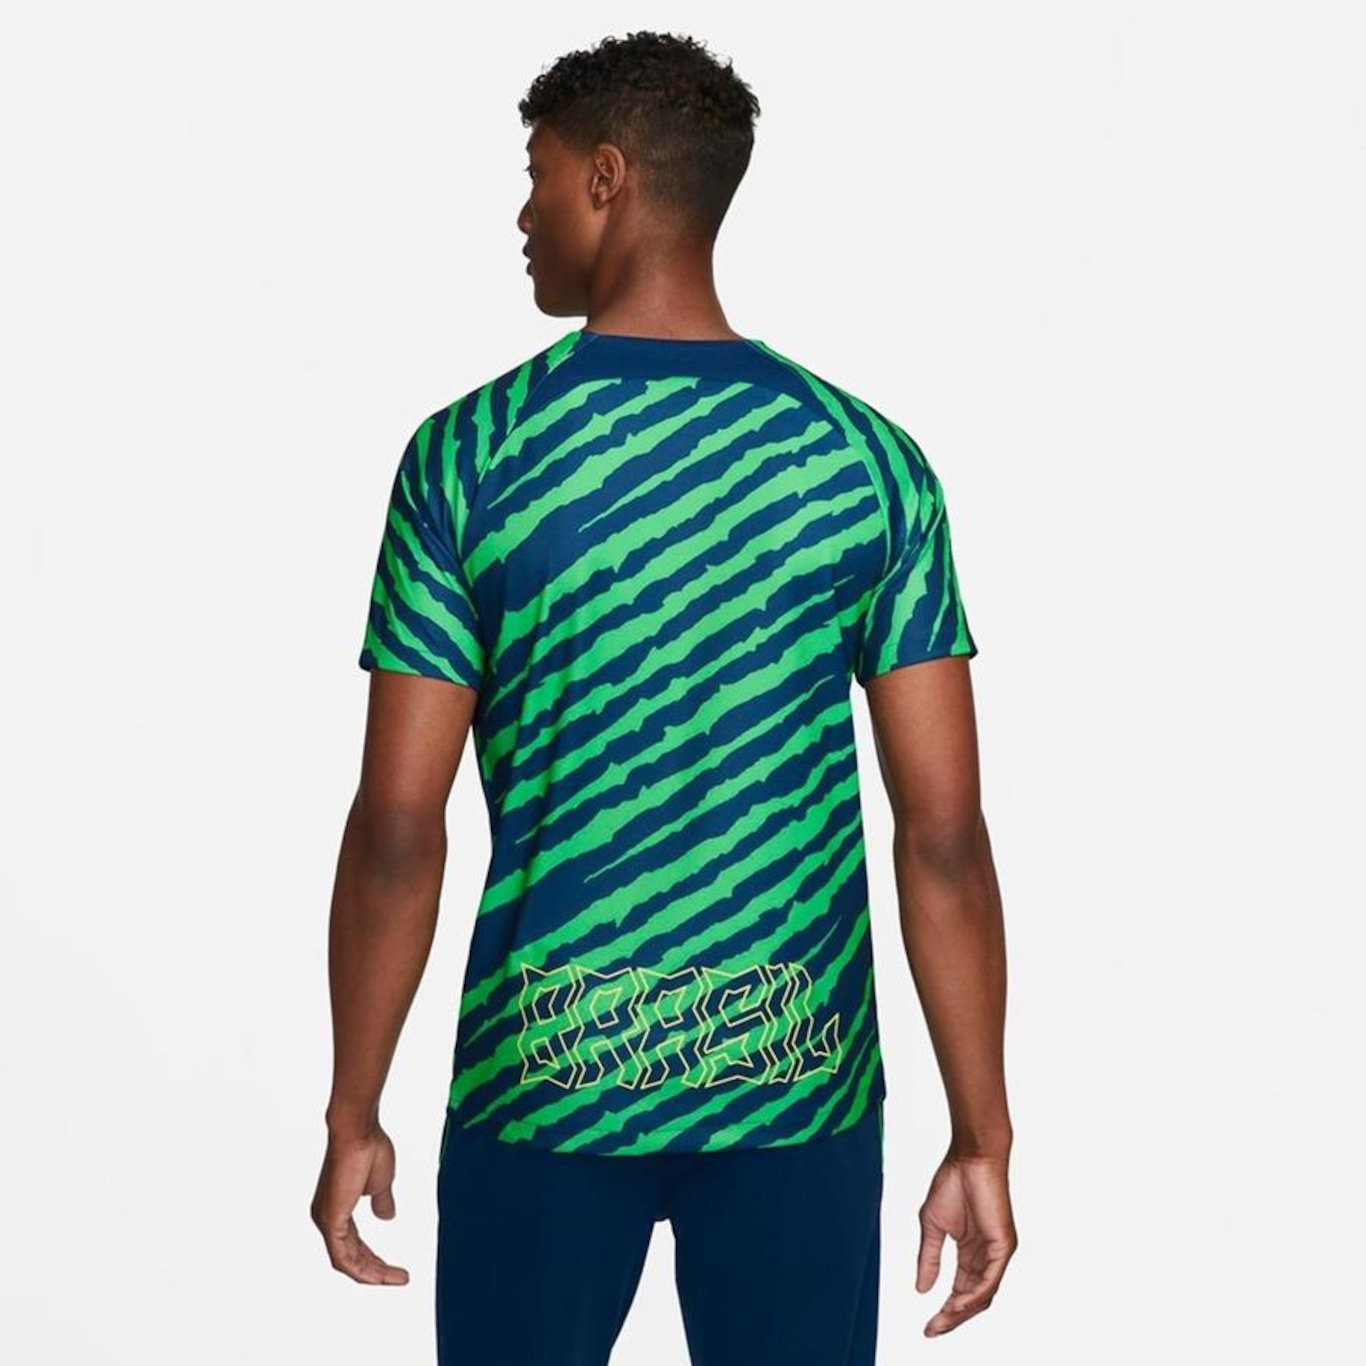 Camiseta Nike Brasil Pré-Jogo Infantil - Azul